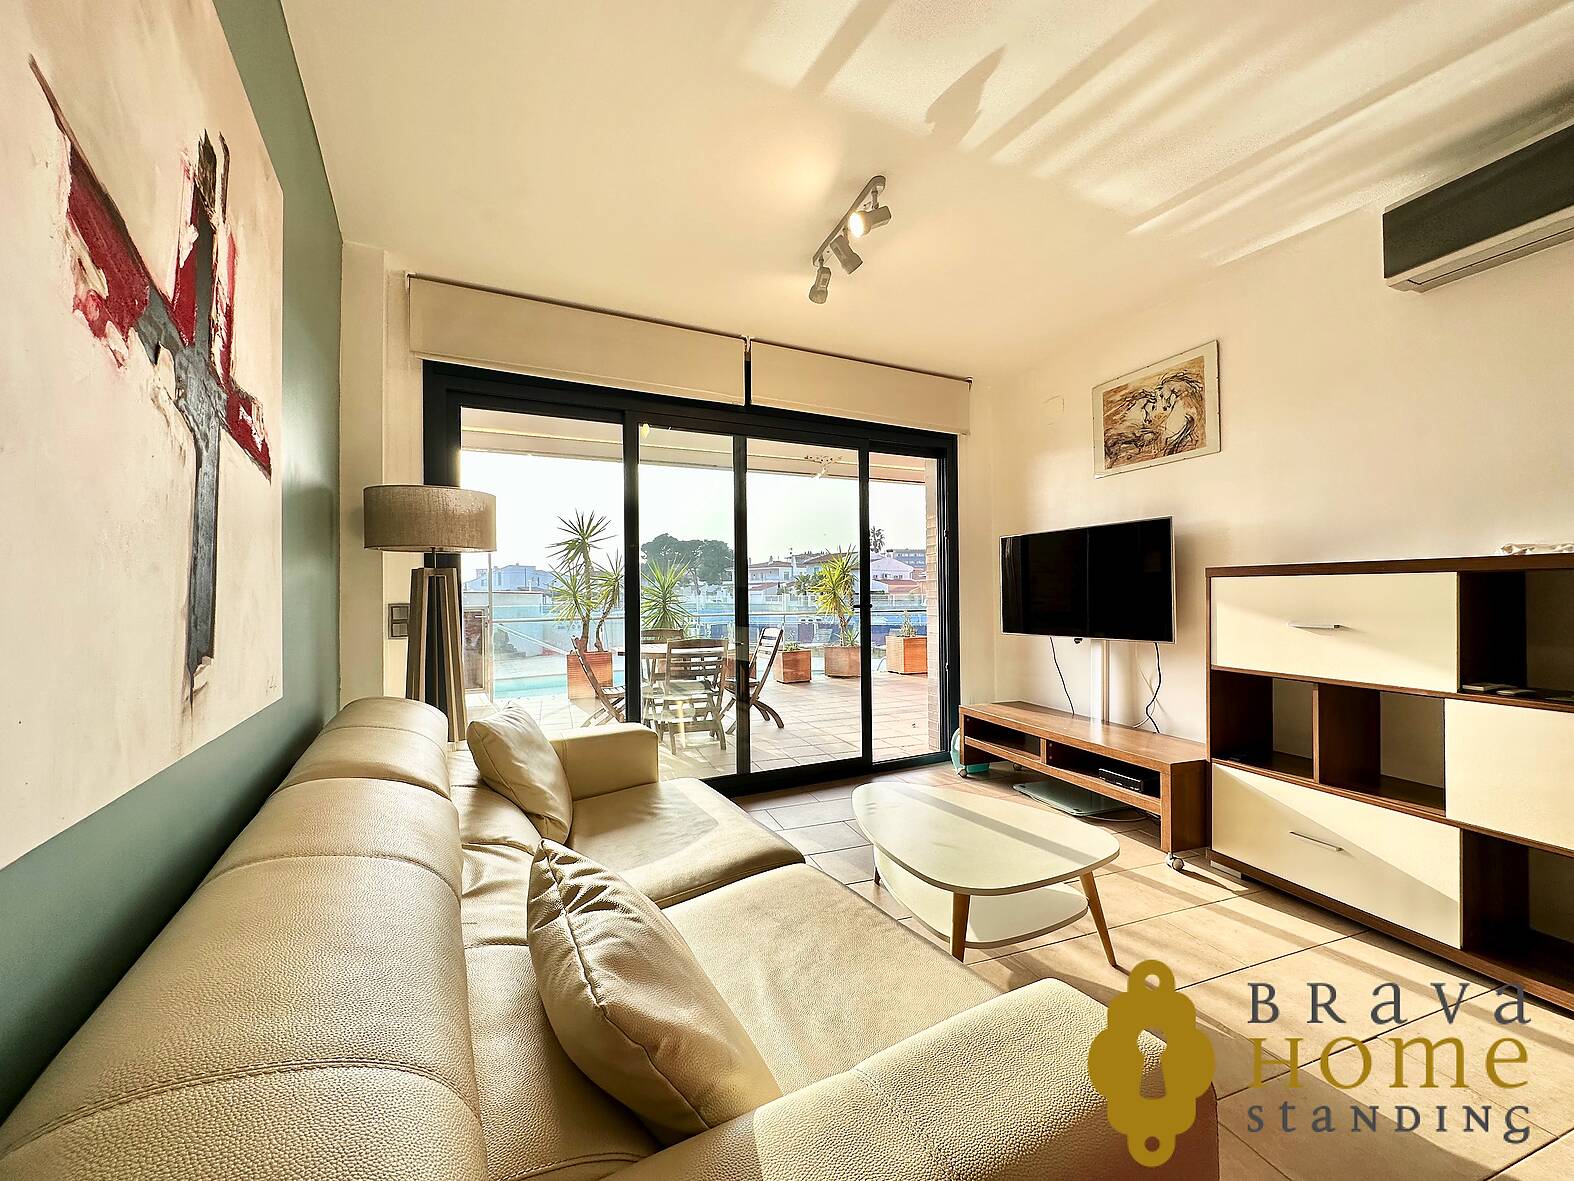 Hermoso apartamento moderno en venta en Roses - Santa Margarita